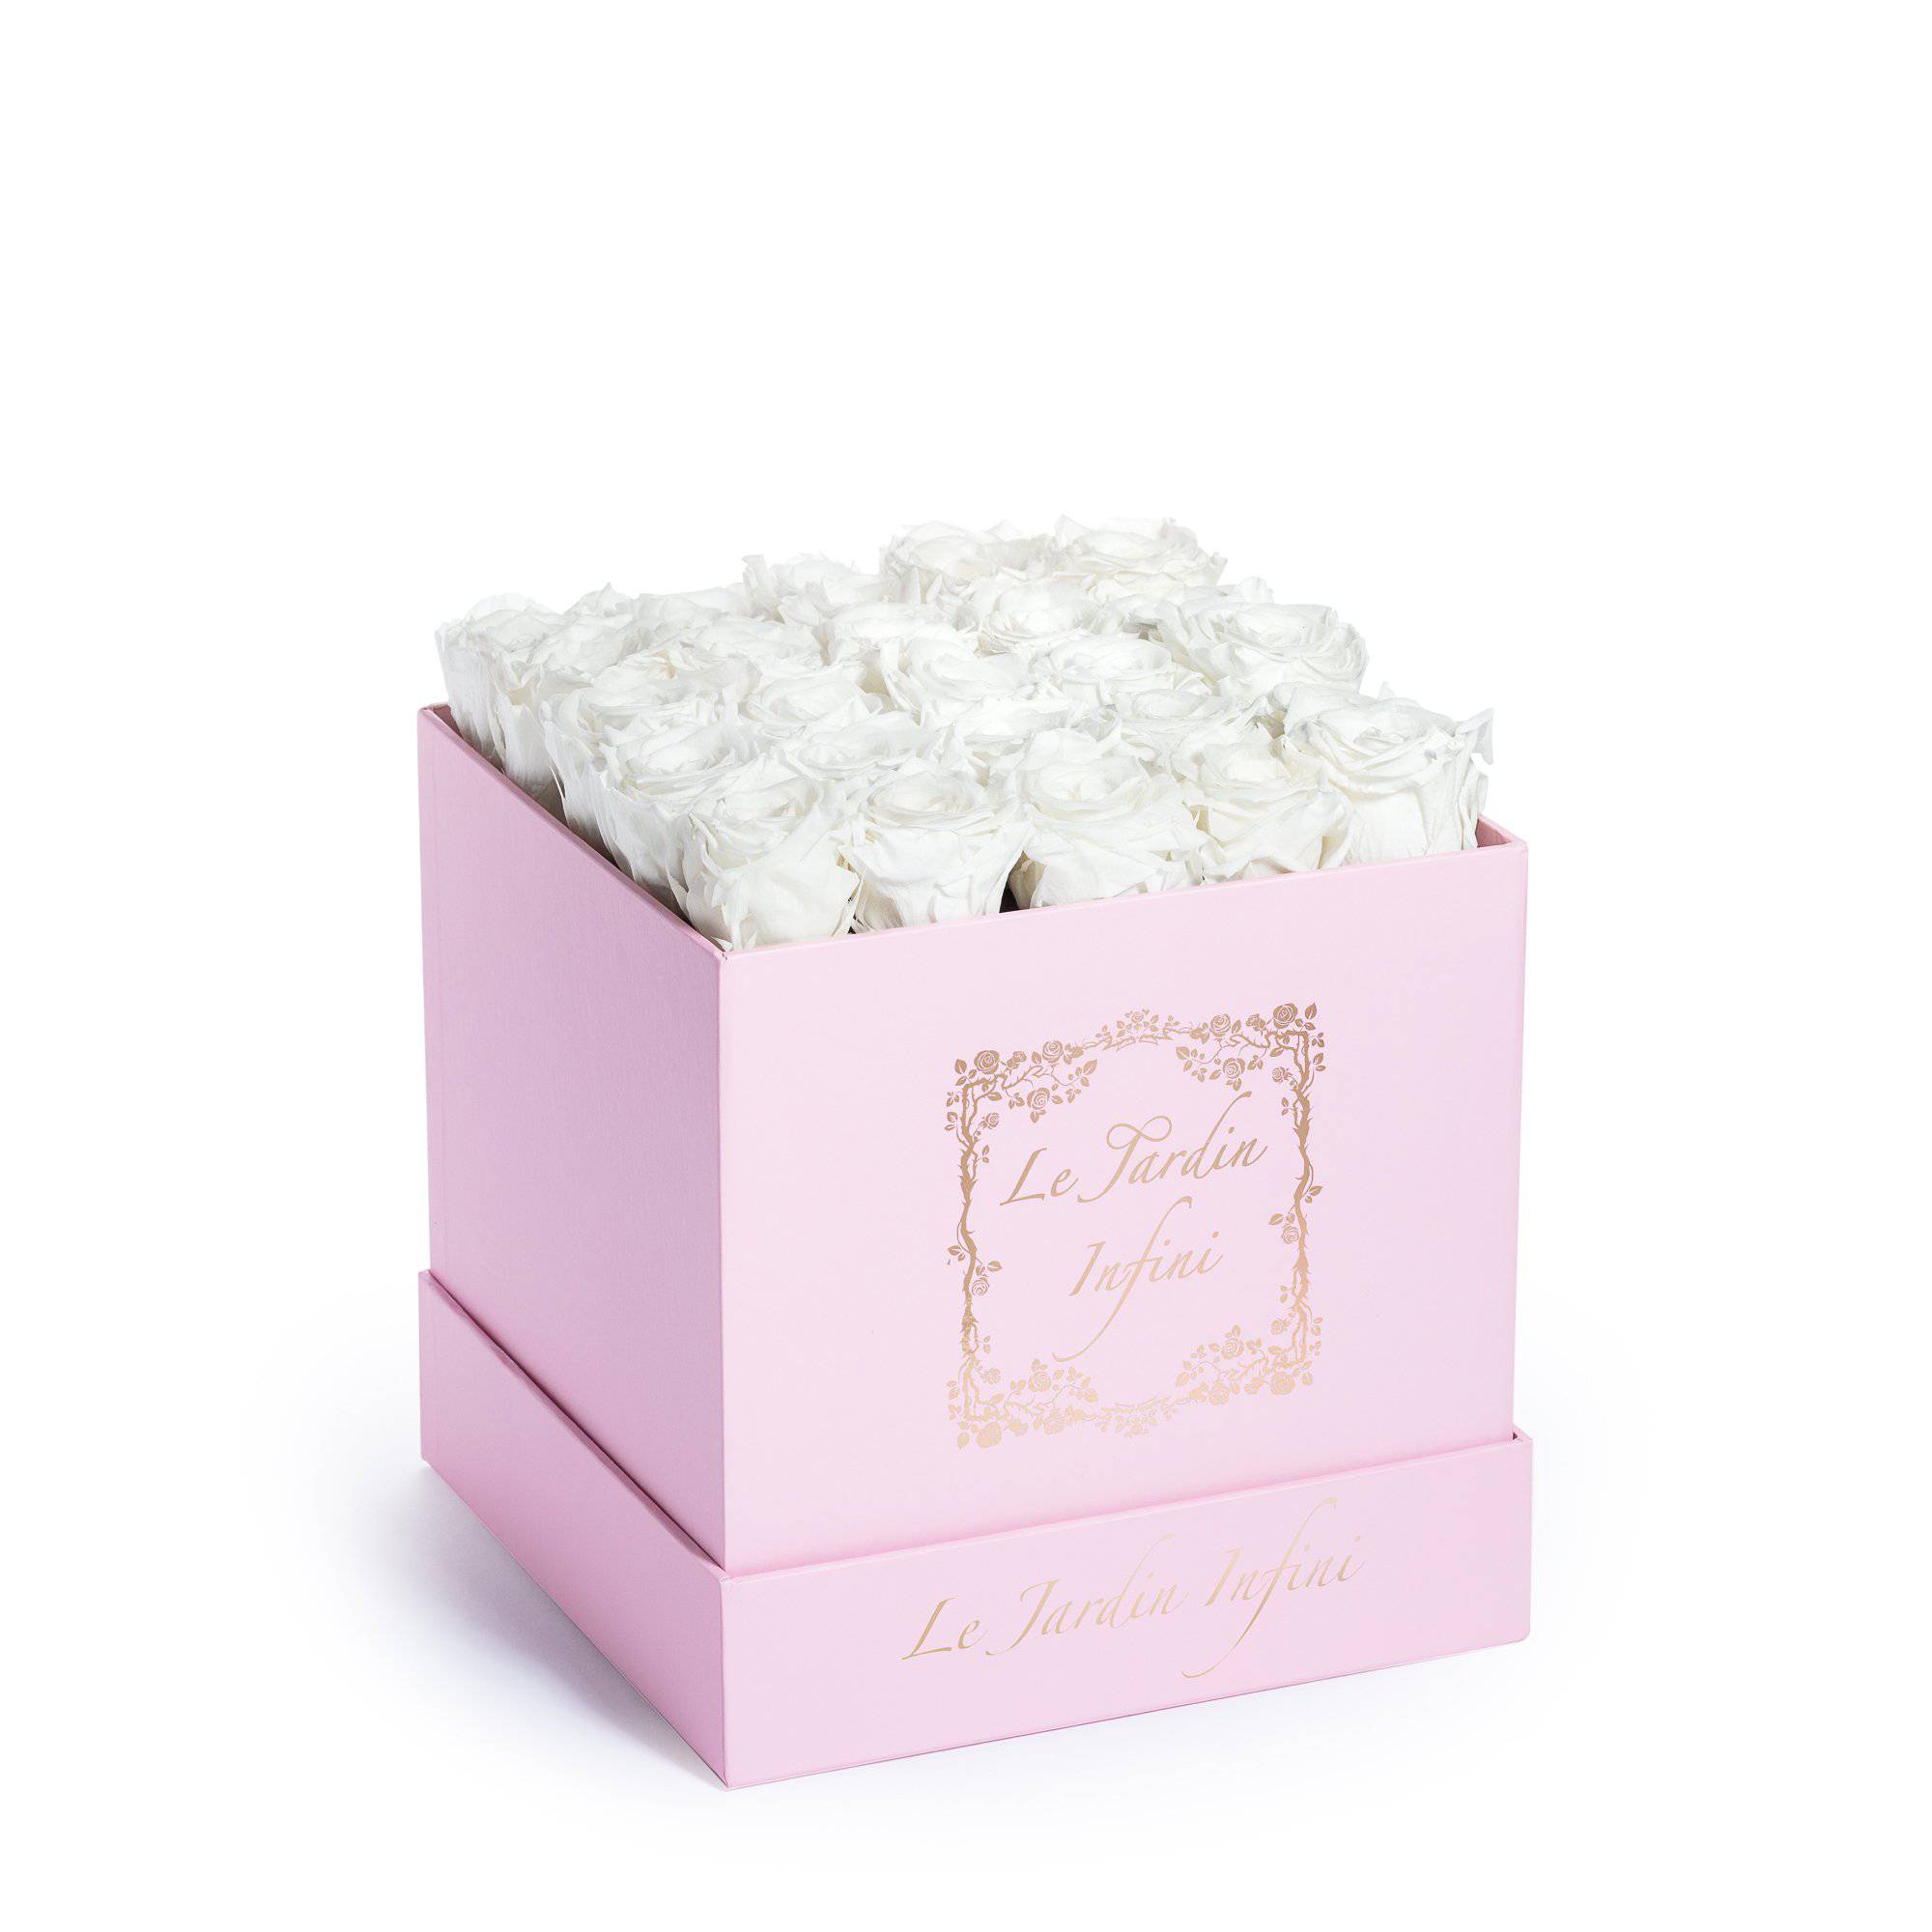 White Preserved Roses - Medium Square Pink Box